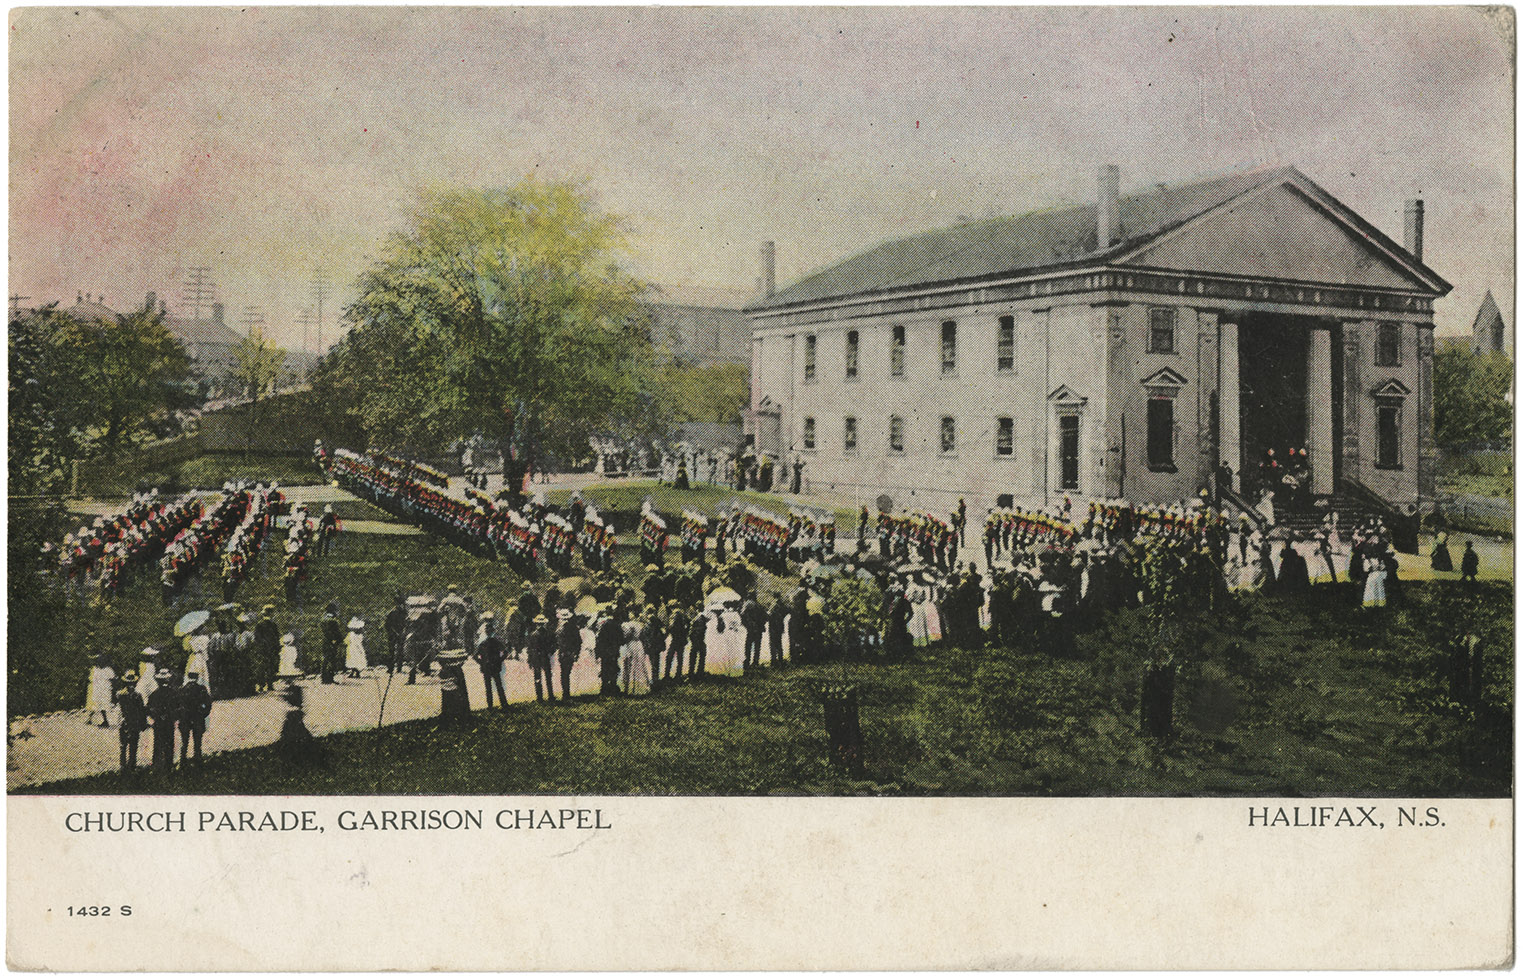 communityalbums - Church parade, Garrison Chapel, Halifax, N.S.